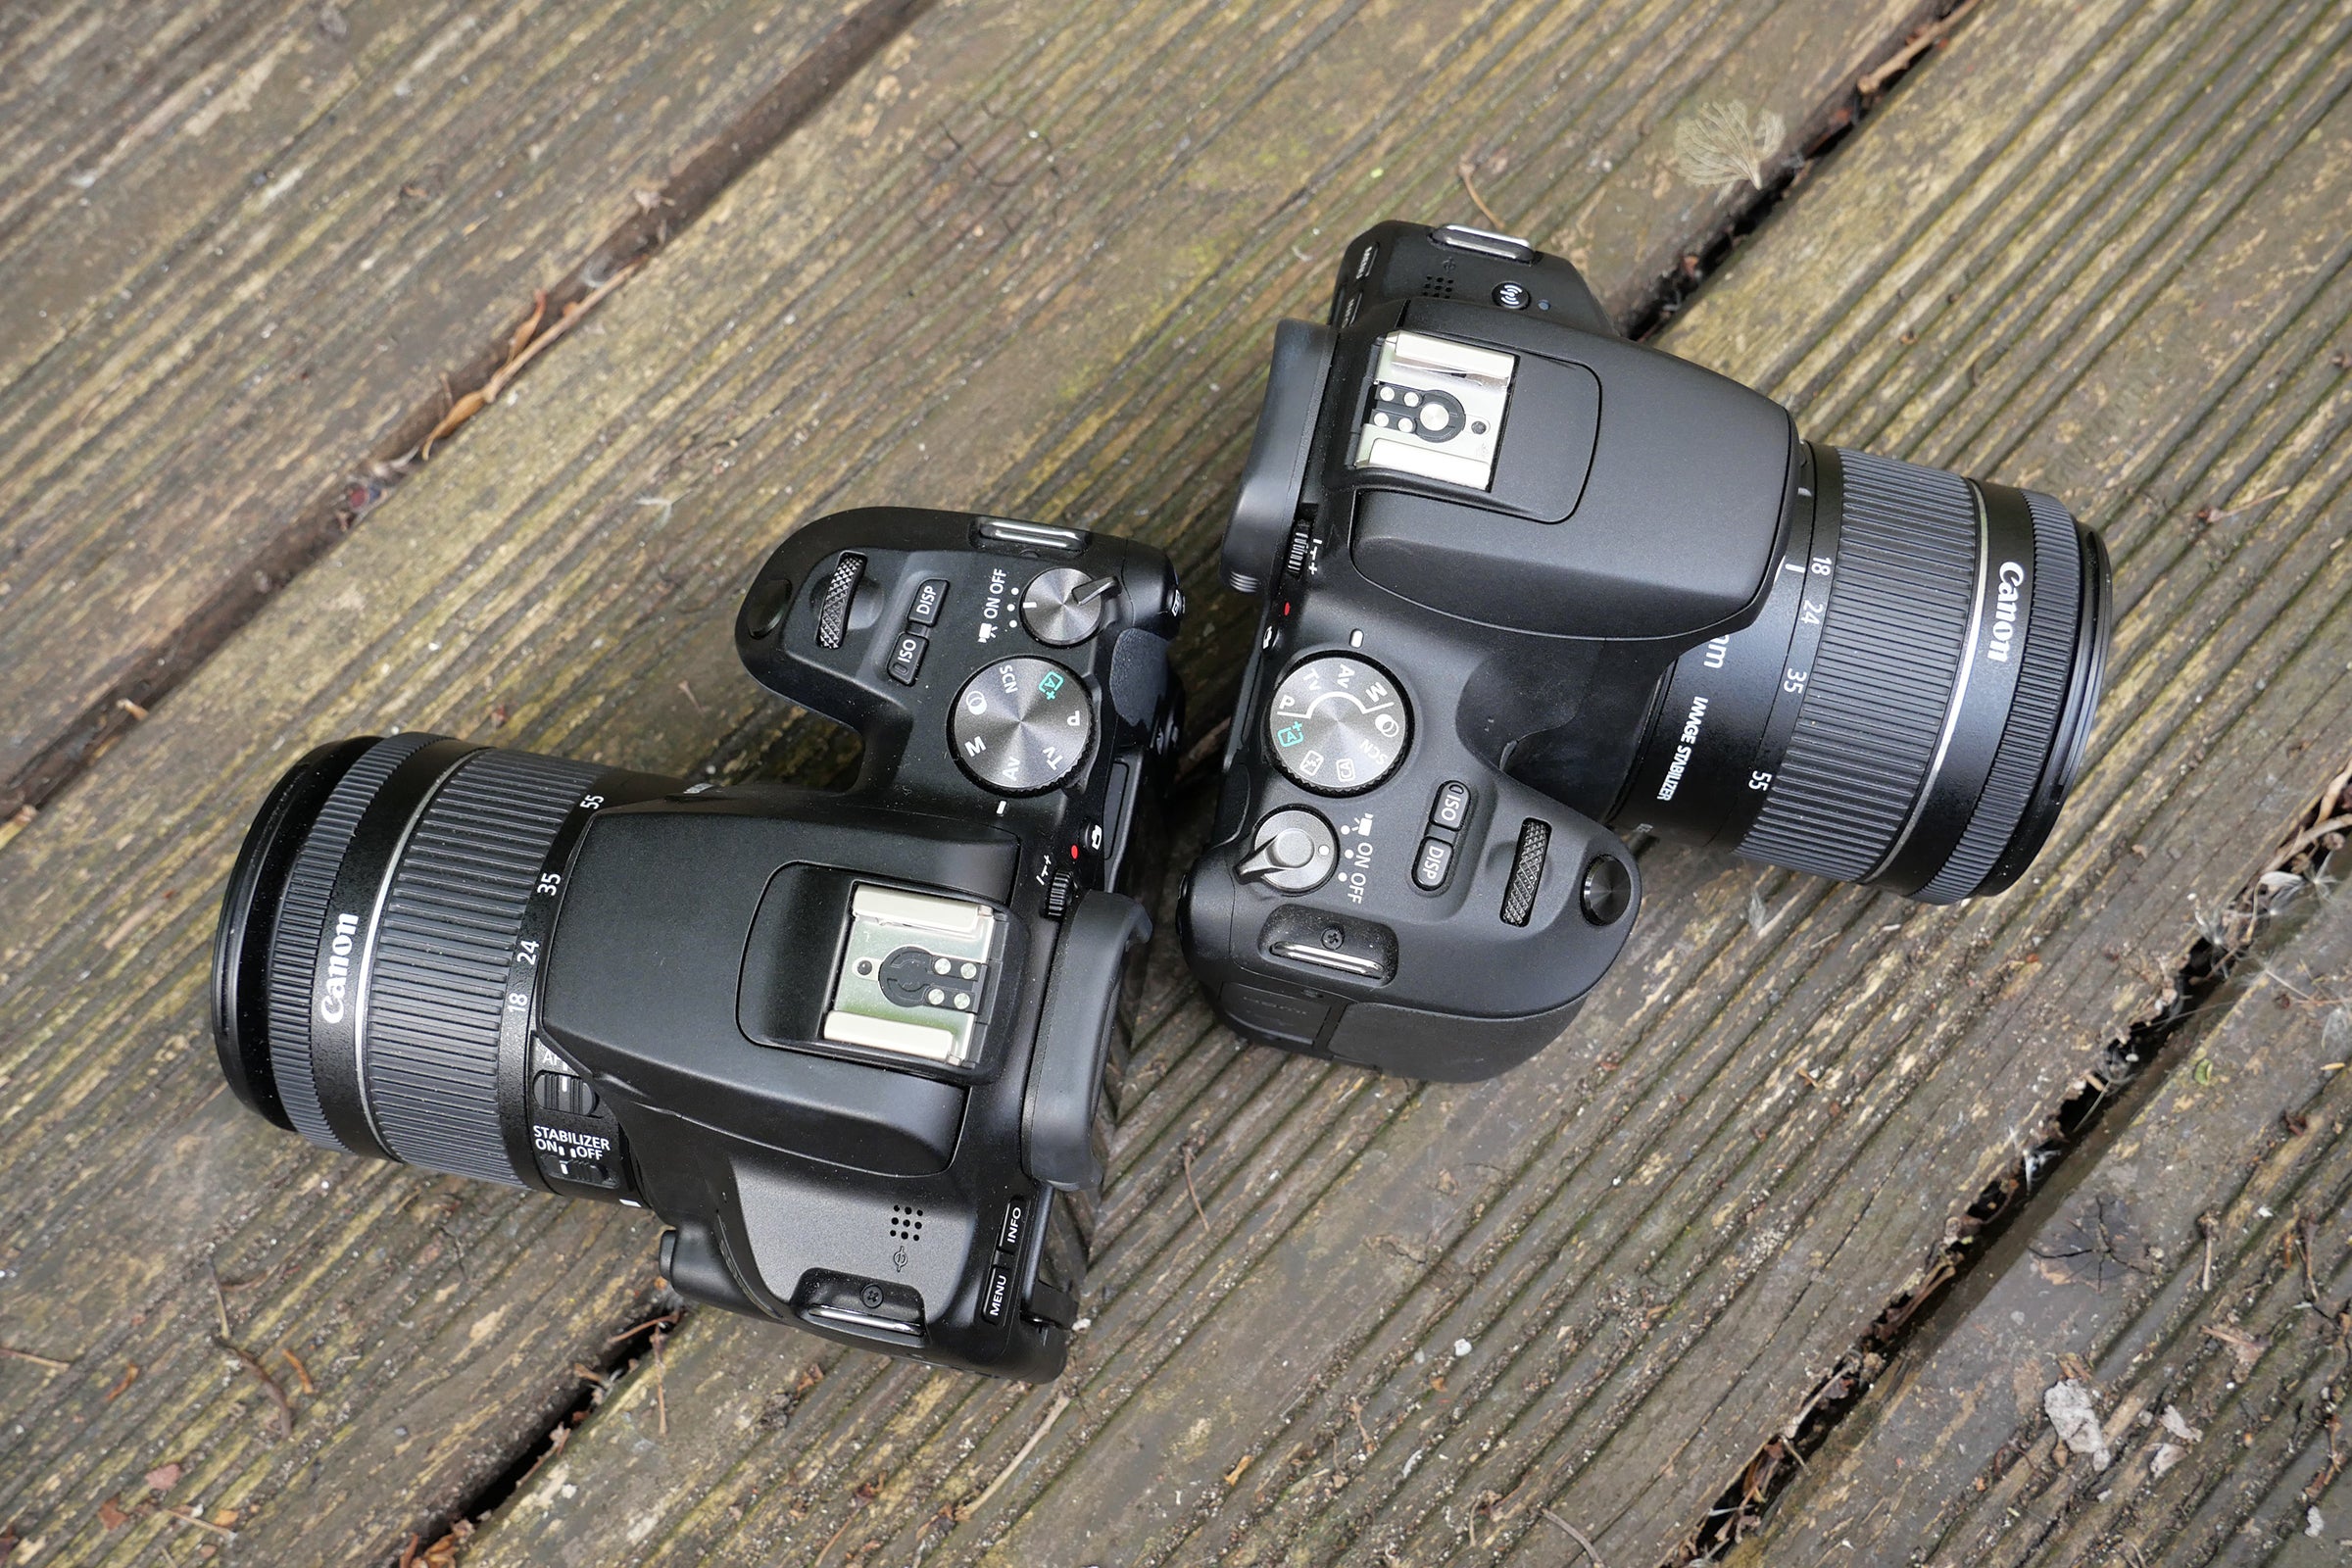 Canon 250D vs. 200D